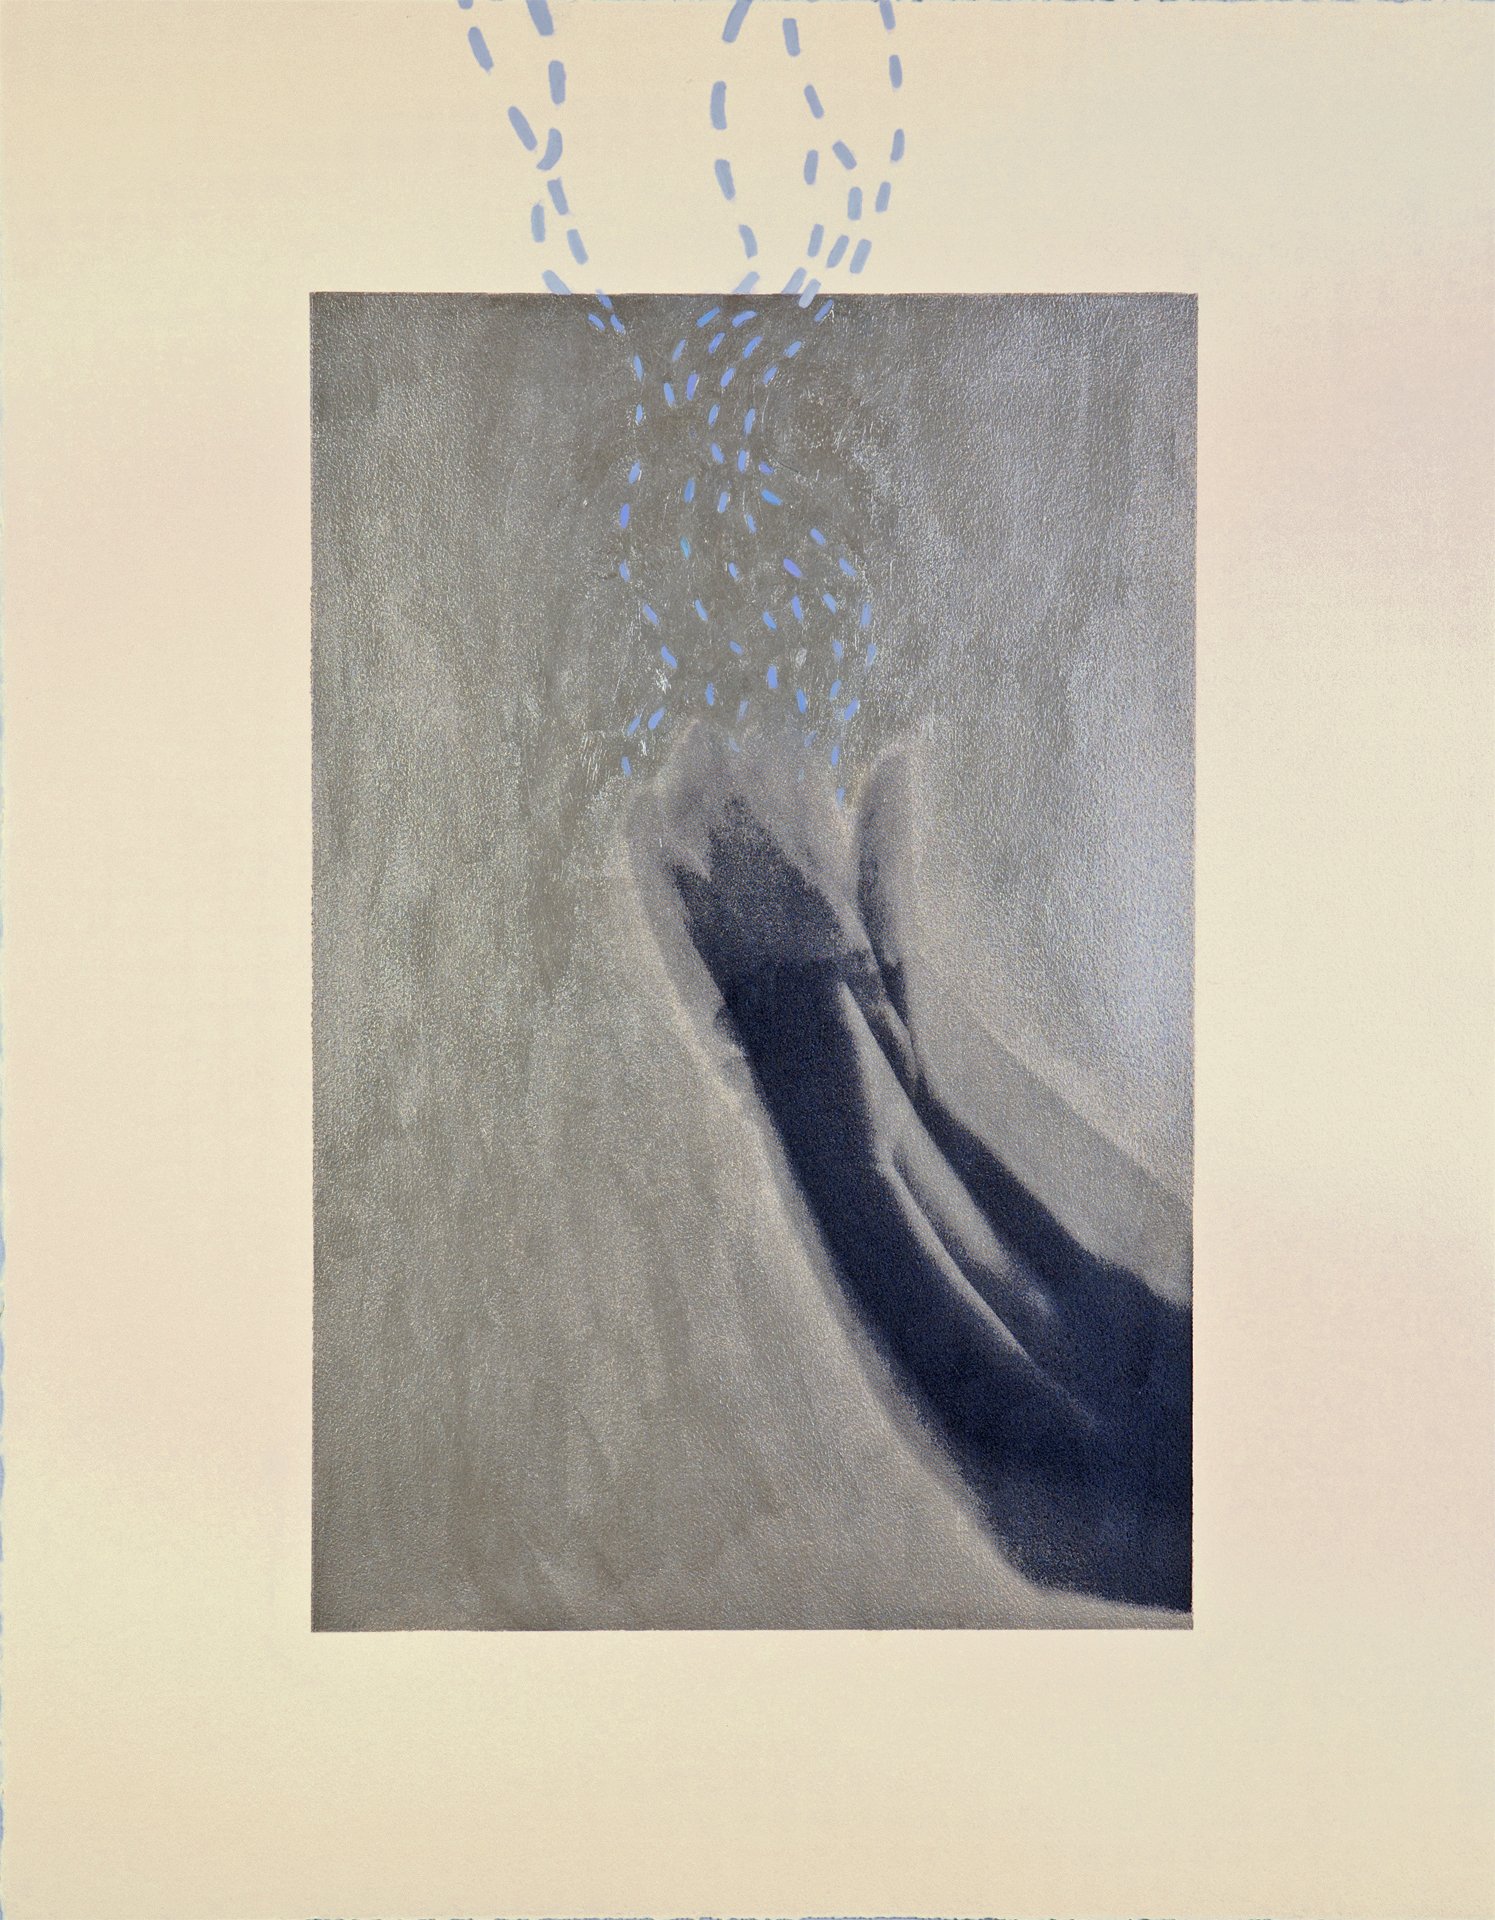    Cultivating No. 21  , 2012, silkscreen print and mixed media, 76 x 56 cm 